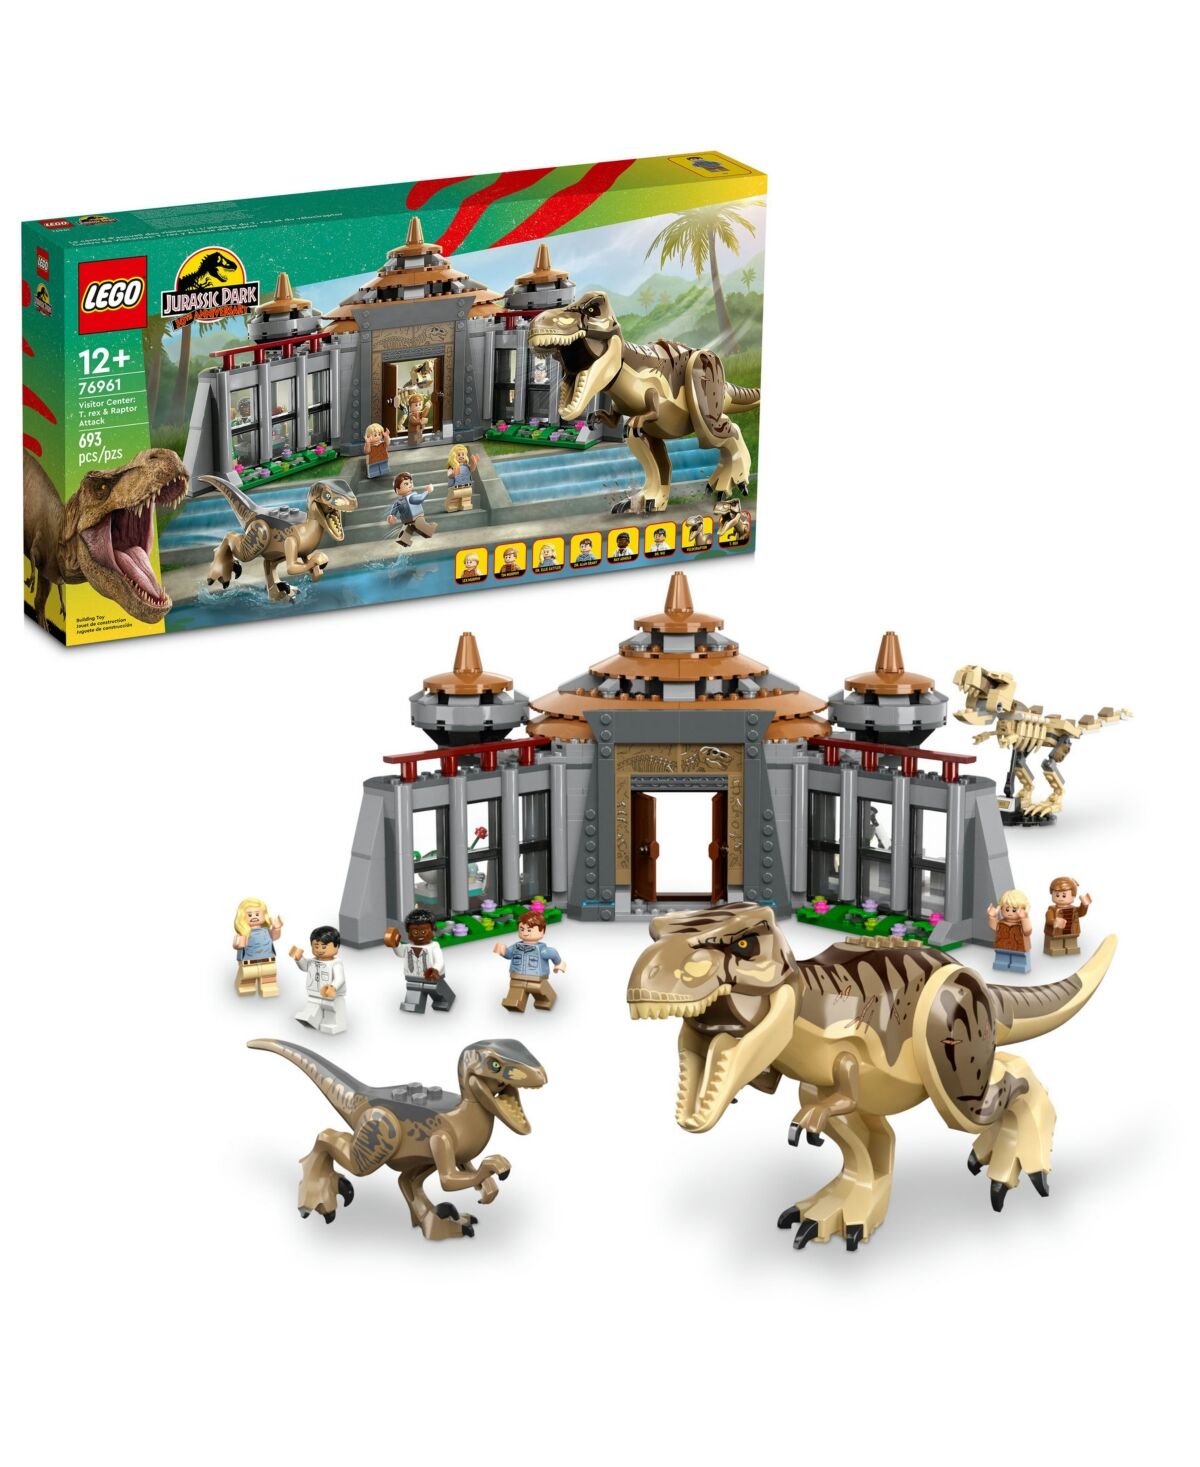 Lego Jurassic Park 76961 Visitor Center and T Rex Raptor Attack Toy Building Set - Multicolor